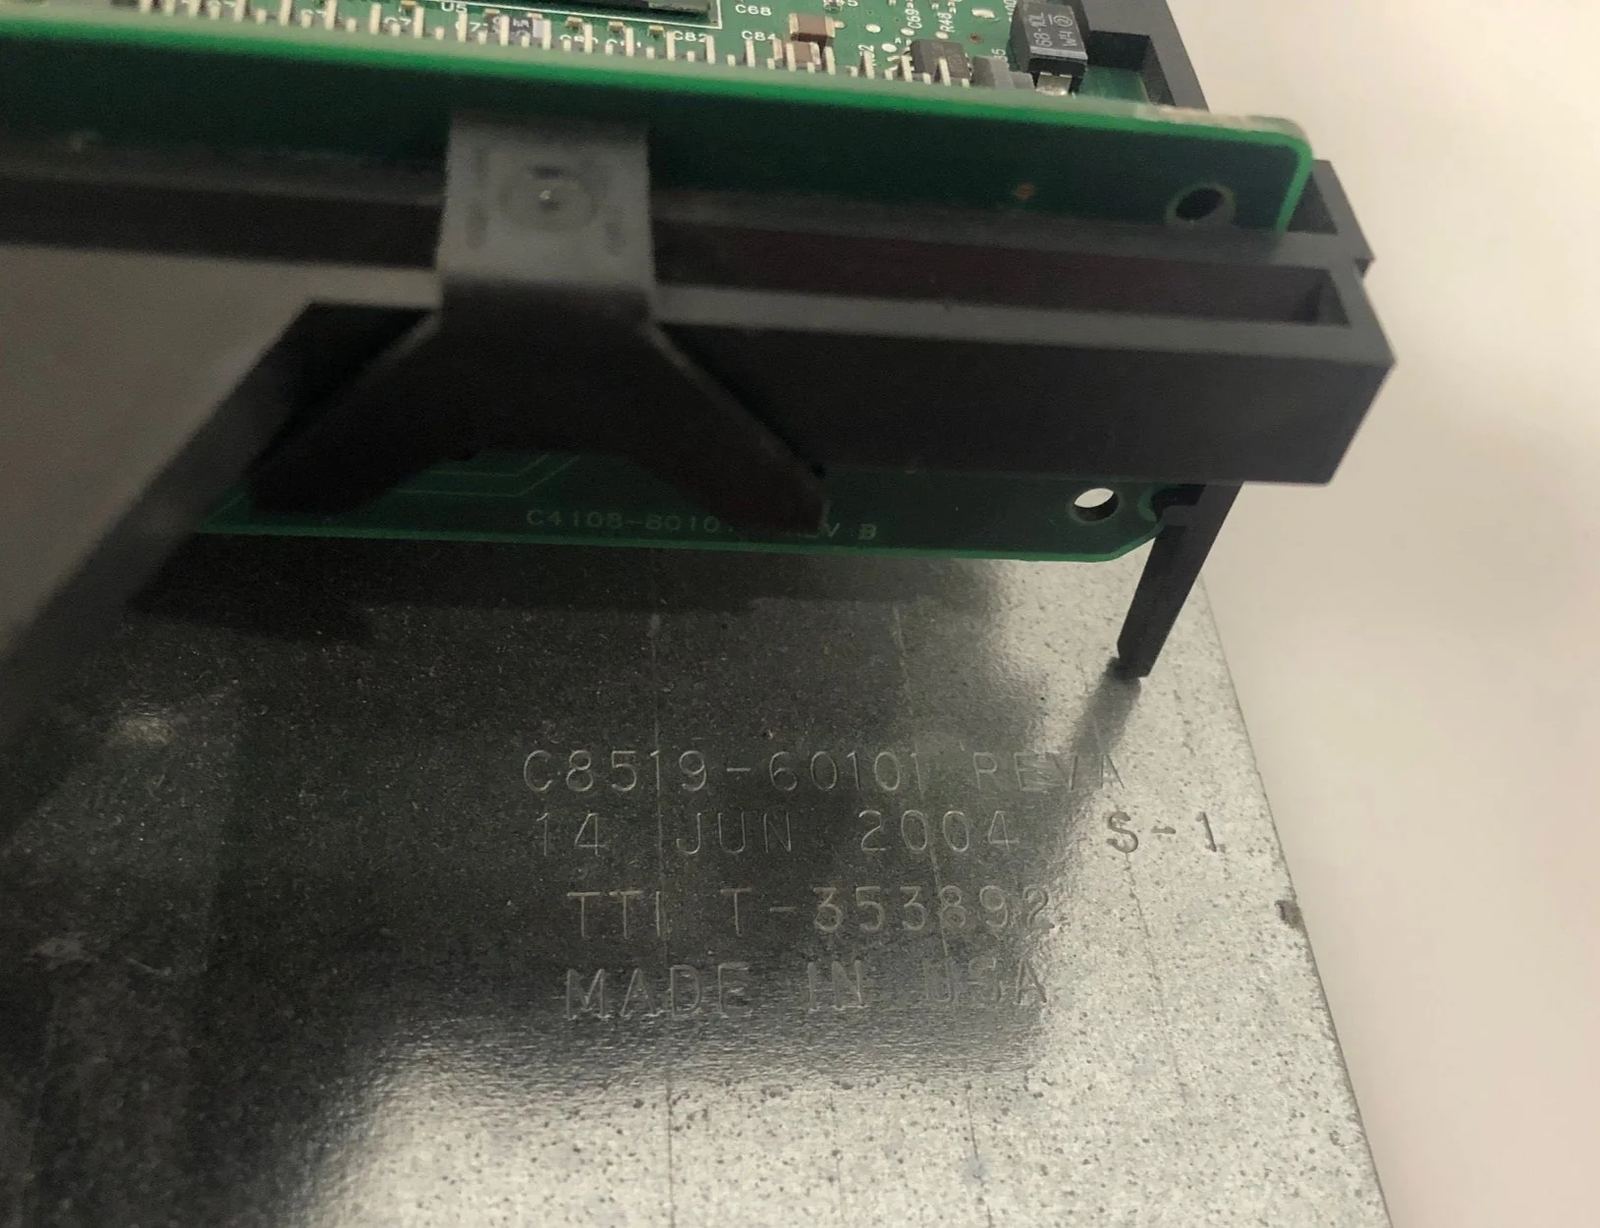 C8519-60101 MAIN LOGIC PCA HP LASERJET 9000